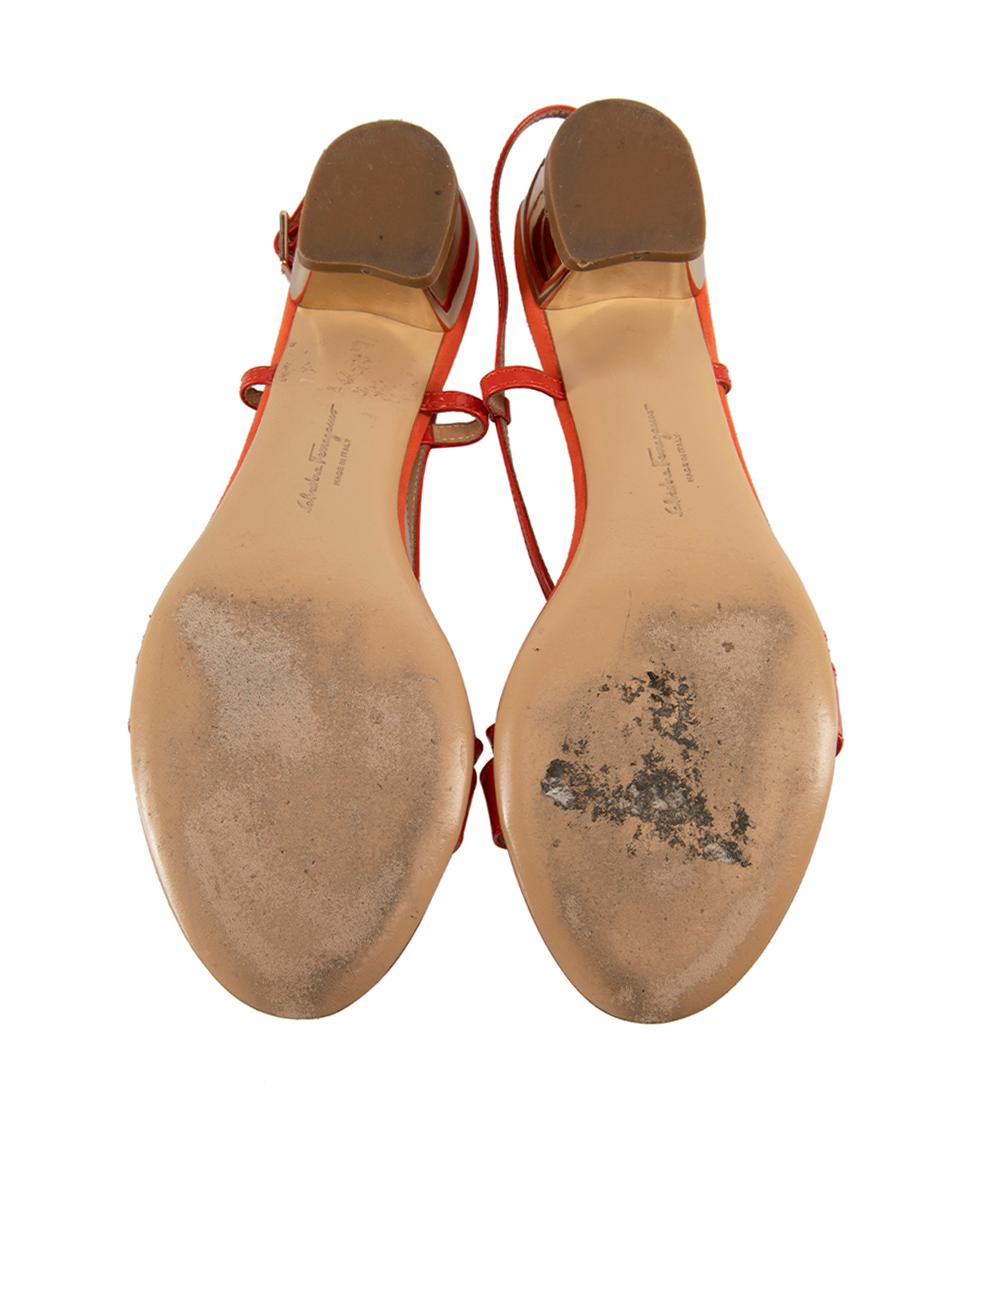 Women's Salvatore Ferragamo Orange Patent Leather Sandals Size US 6.5